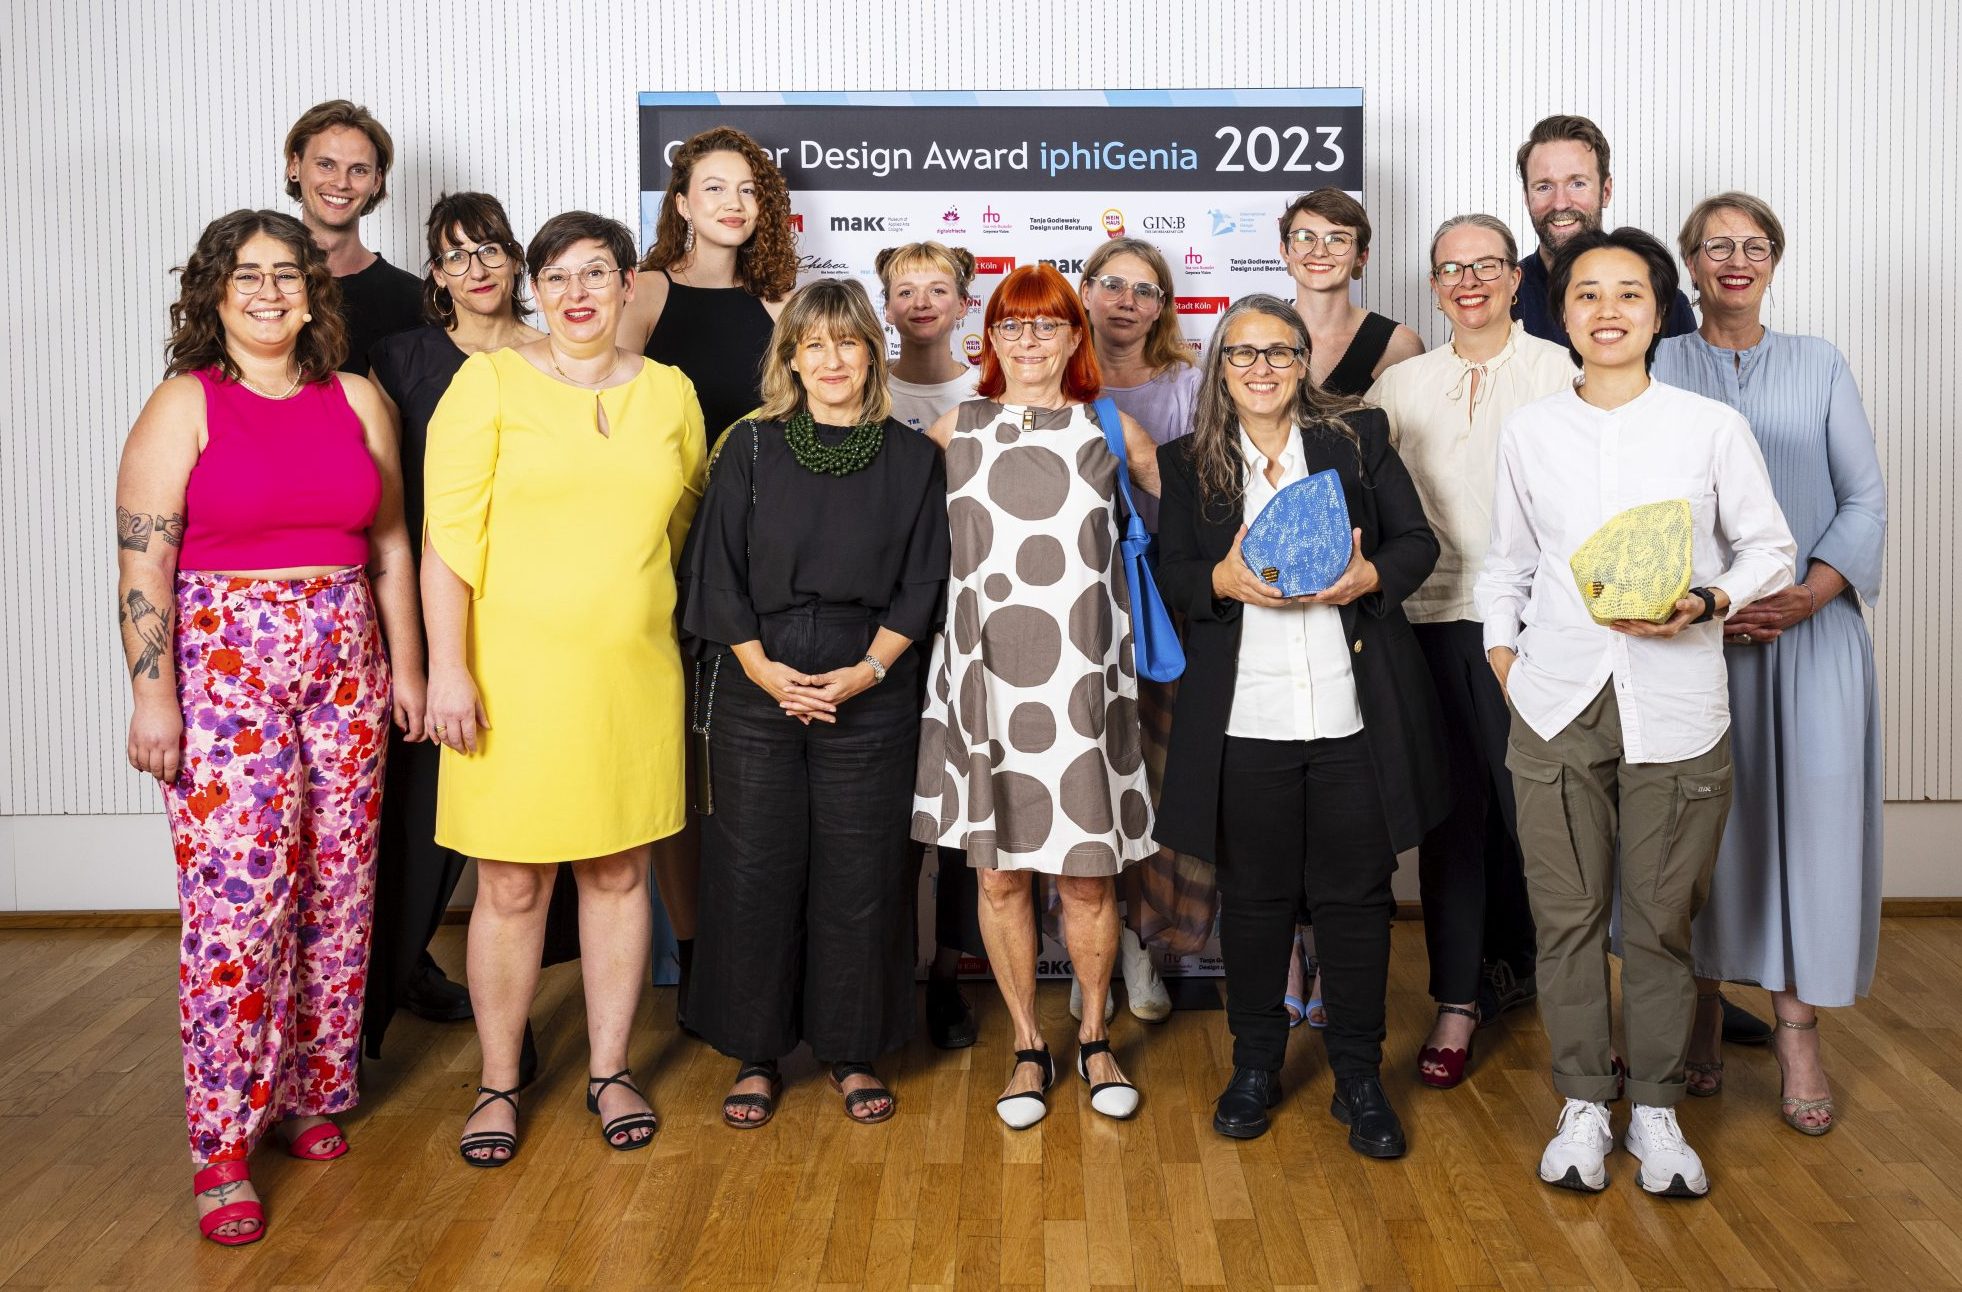 jury, winners and team of the iphiGenia Gender Design Award 2023